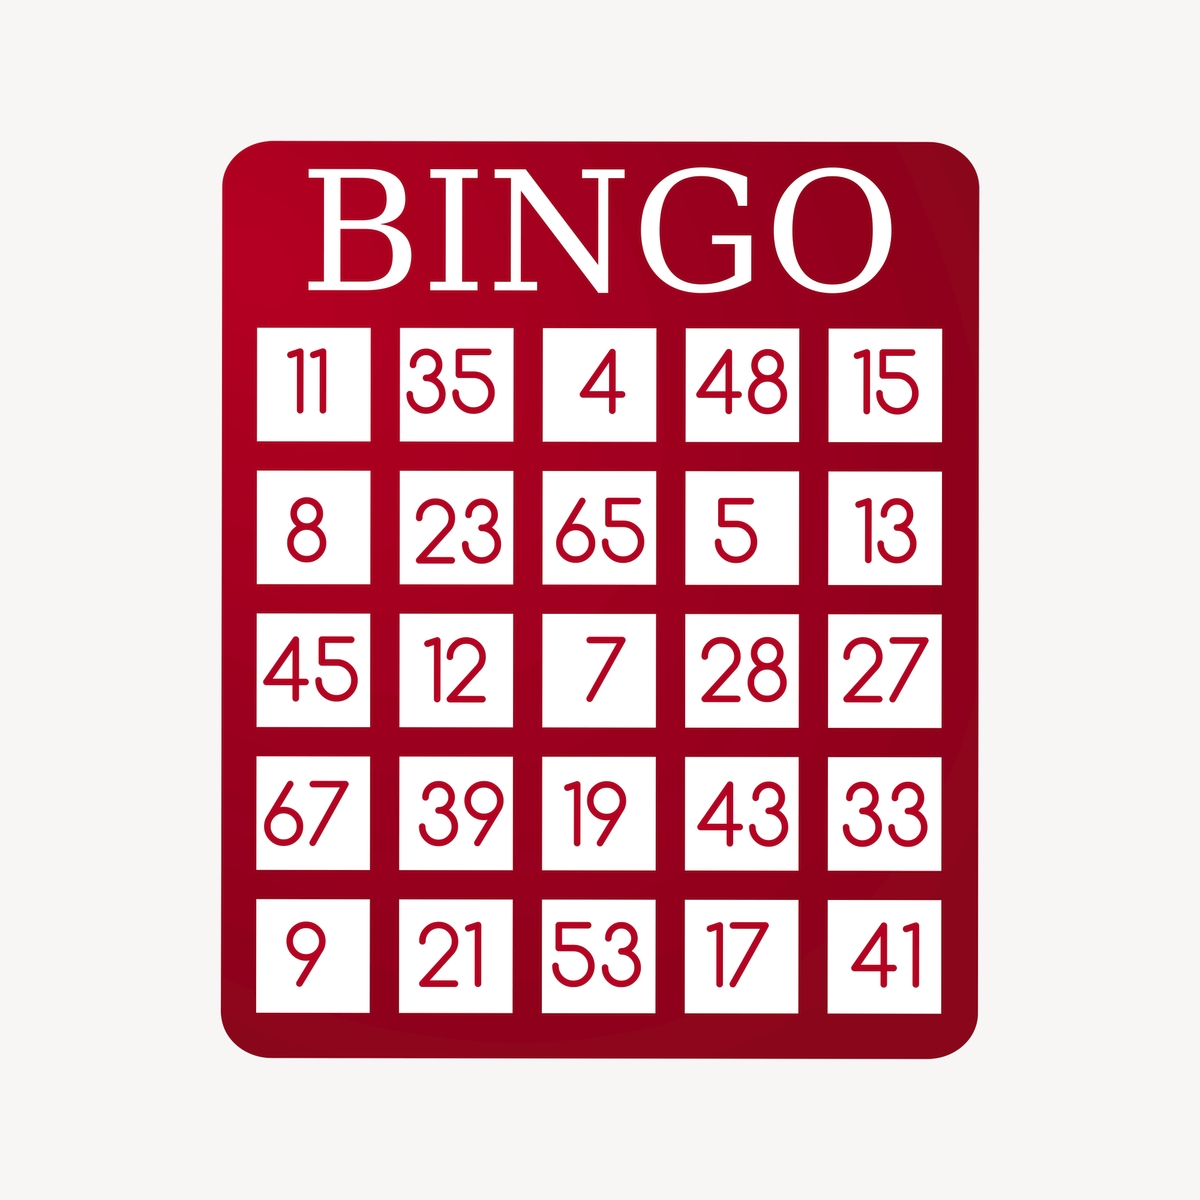 evolution of bingo, how bingo has evolved